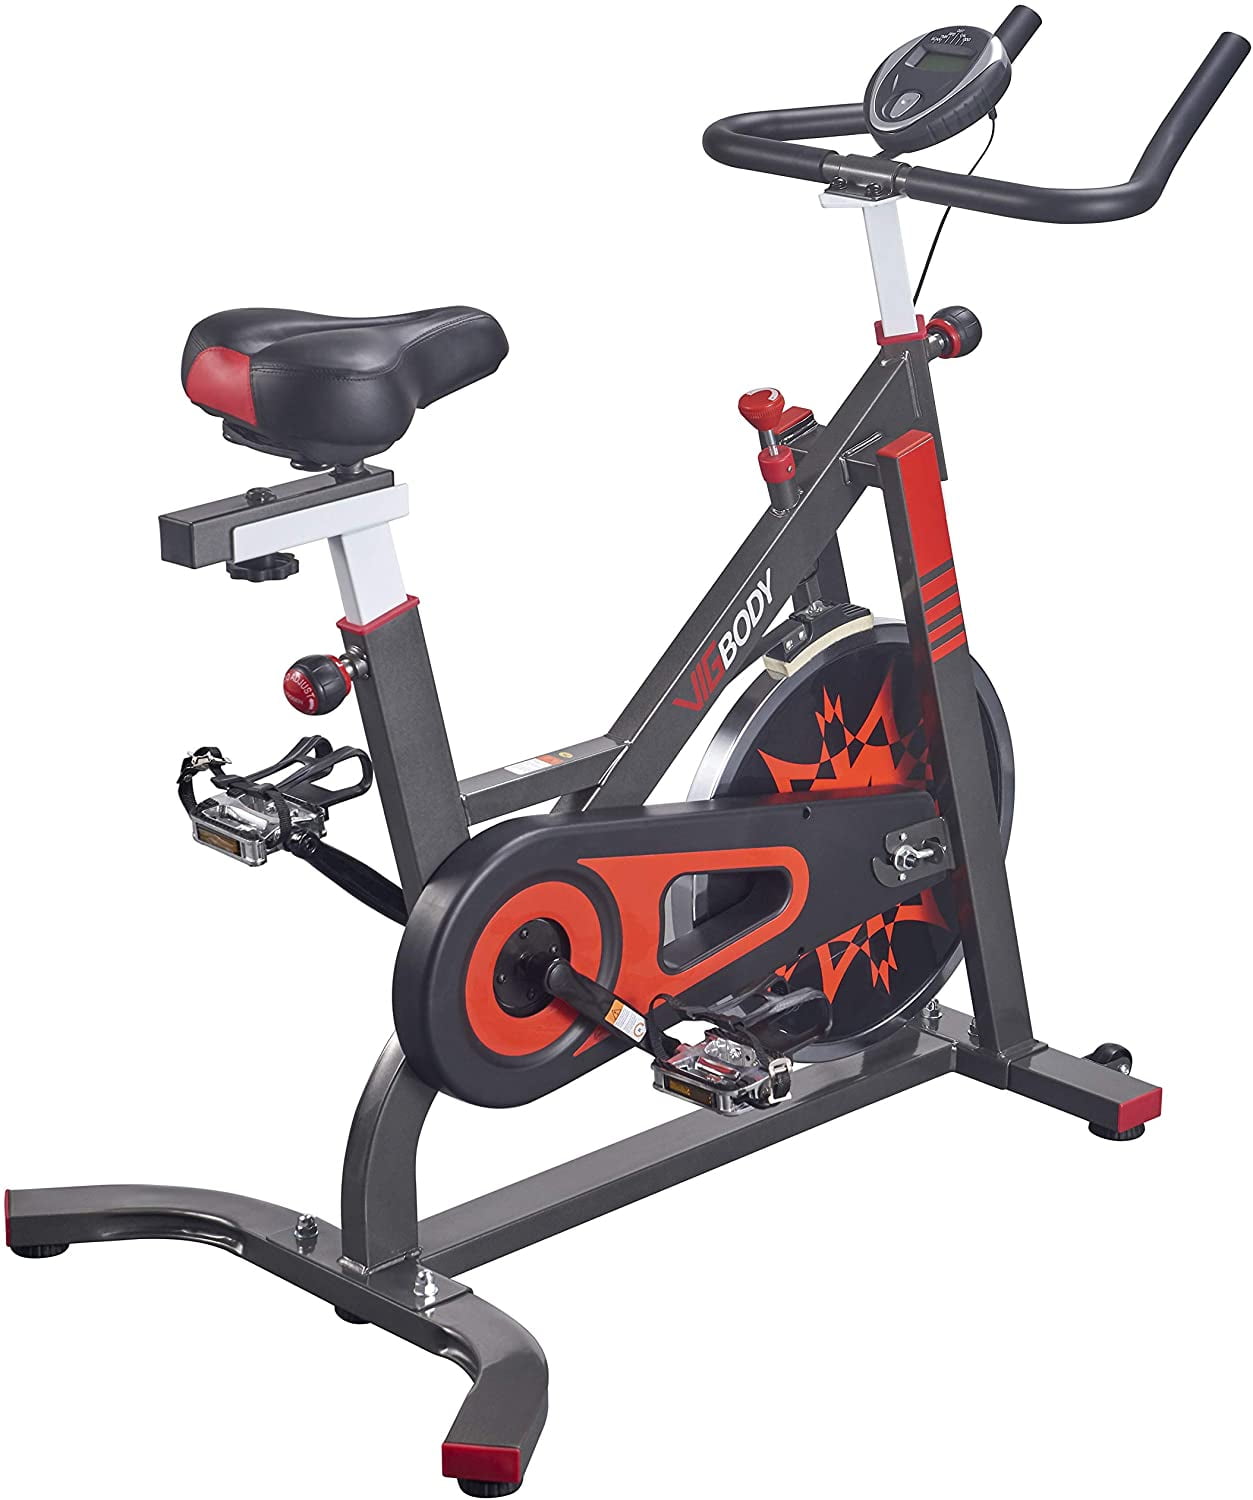 VIGBODY Exercise Bike Indoor Cycling Bicycle Stationary Bikes Cardio Workout Machine Upright Bike Belt Drive Home Gym 